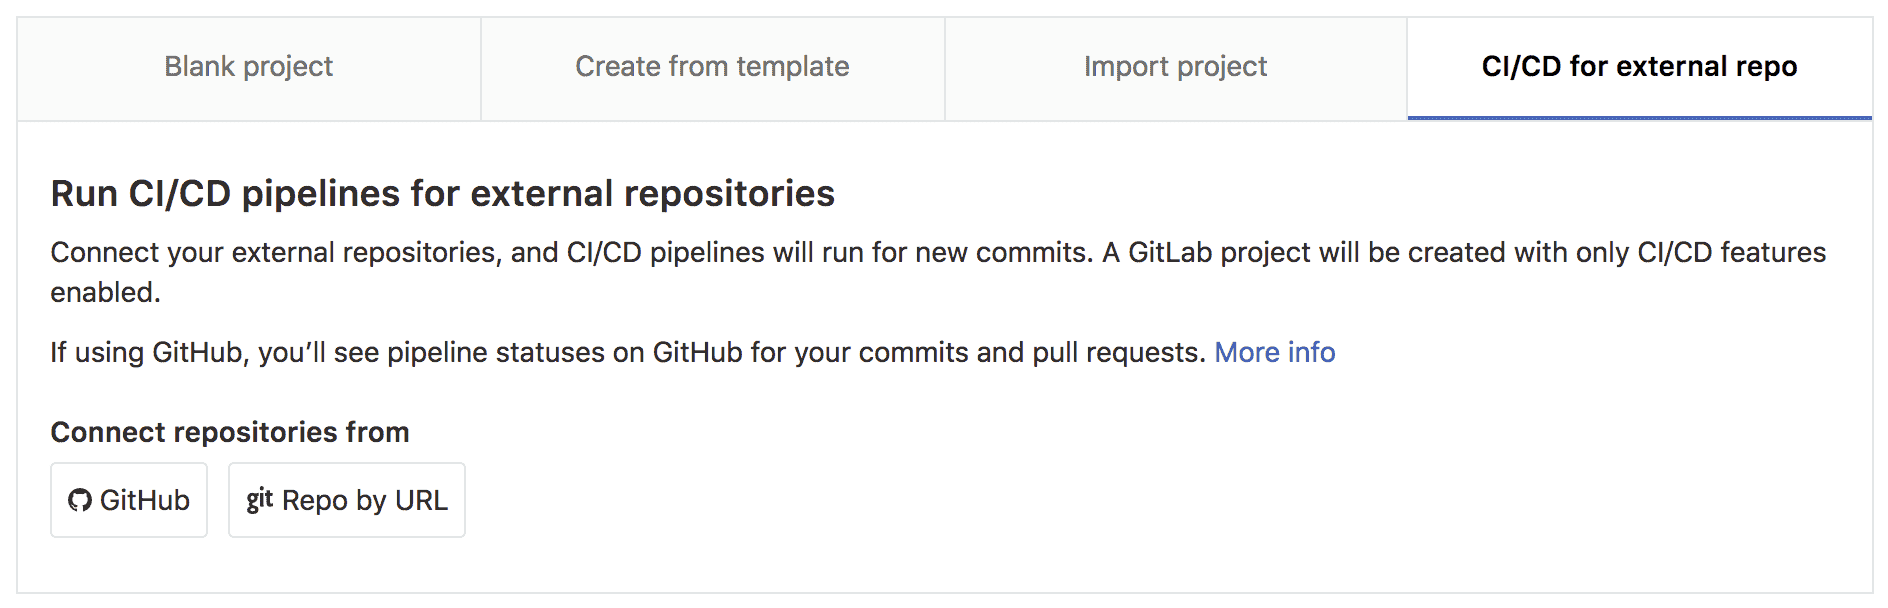 GitLab CI/CD for external repos